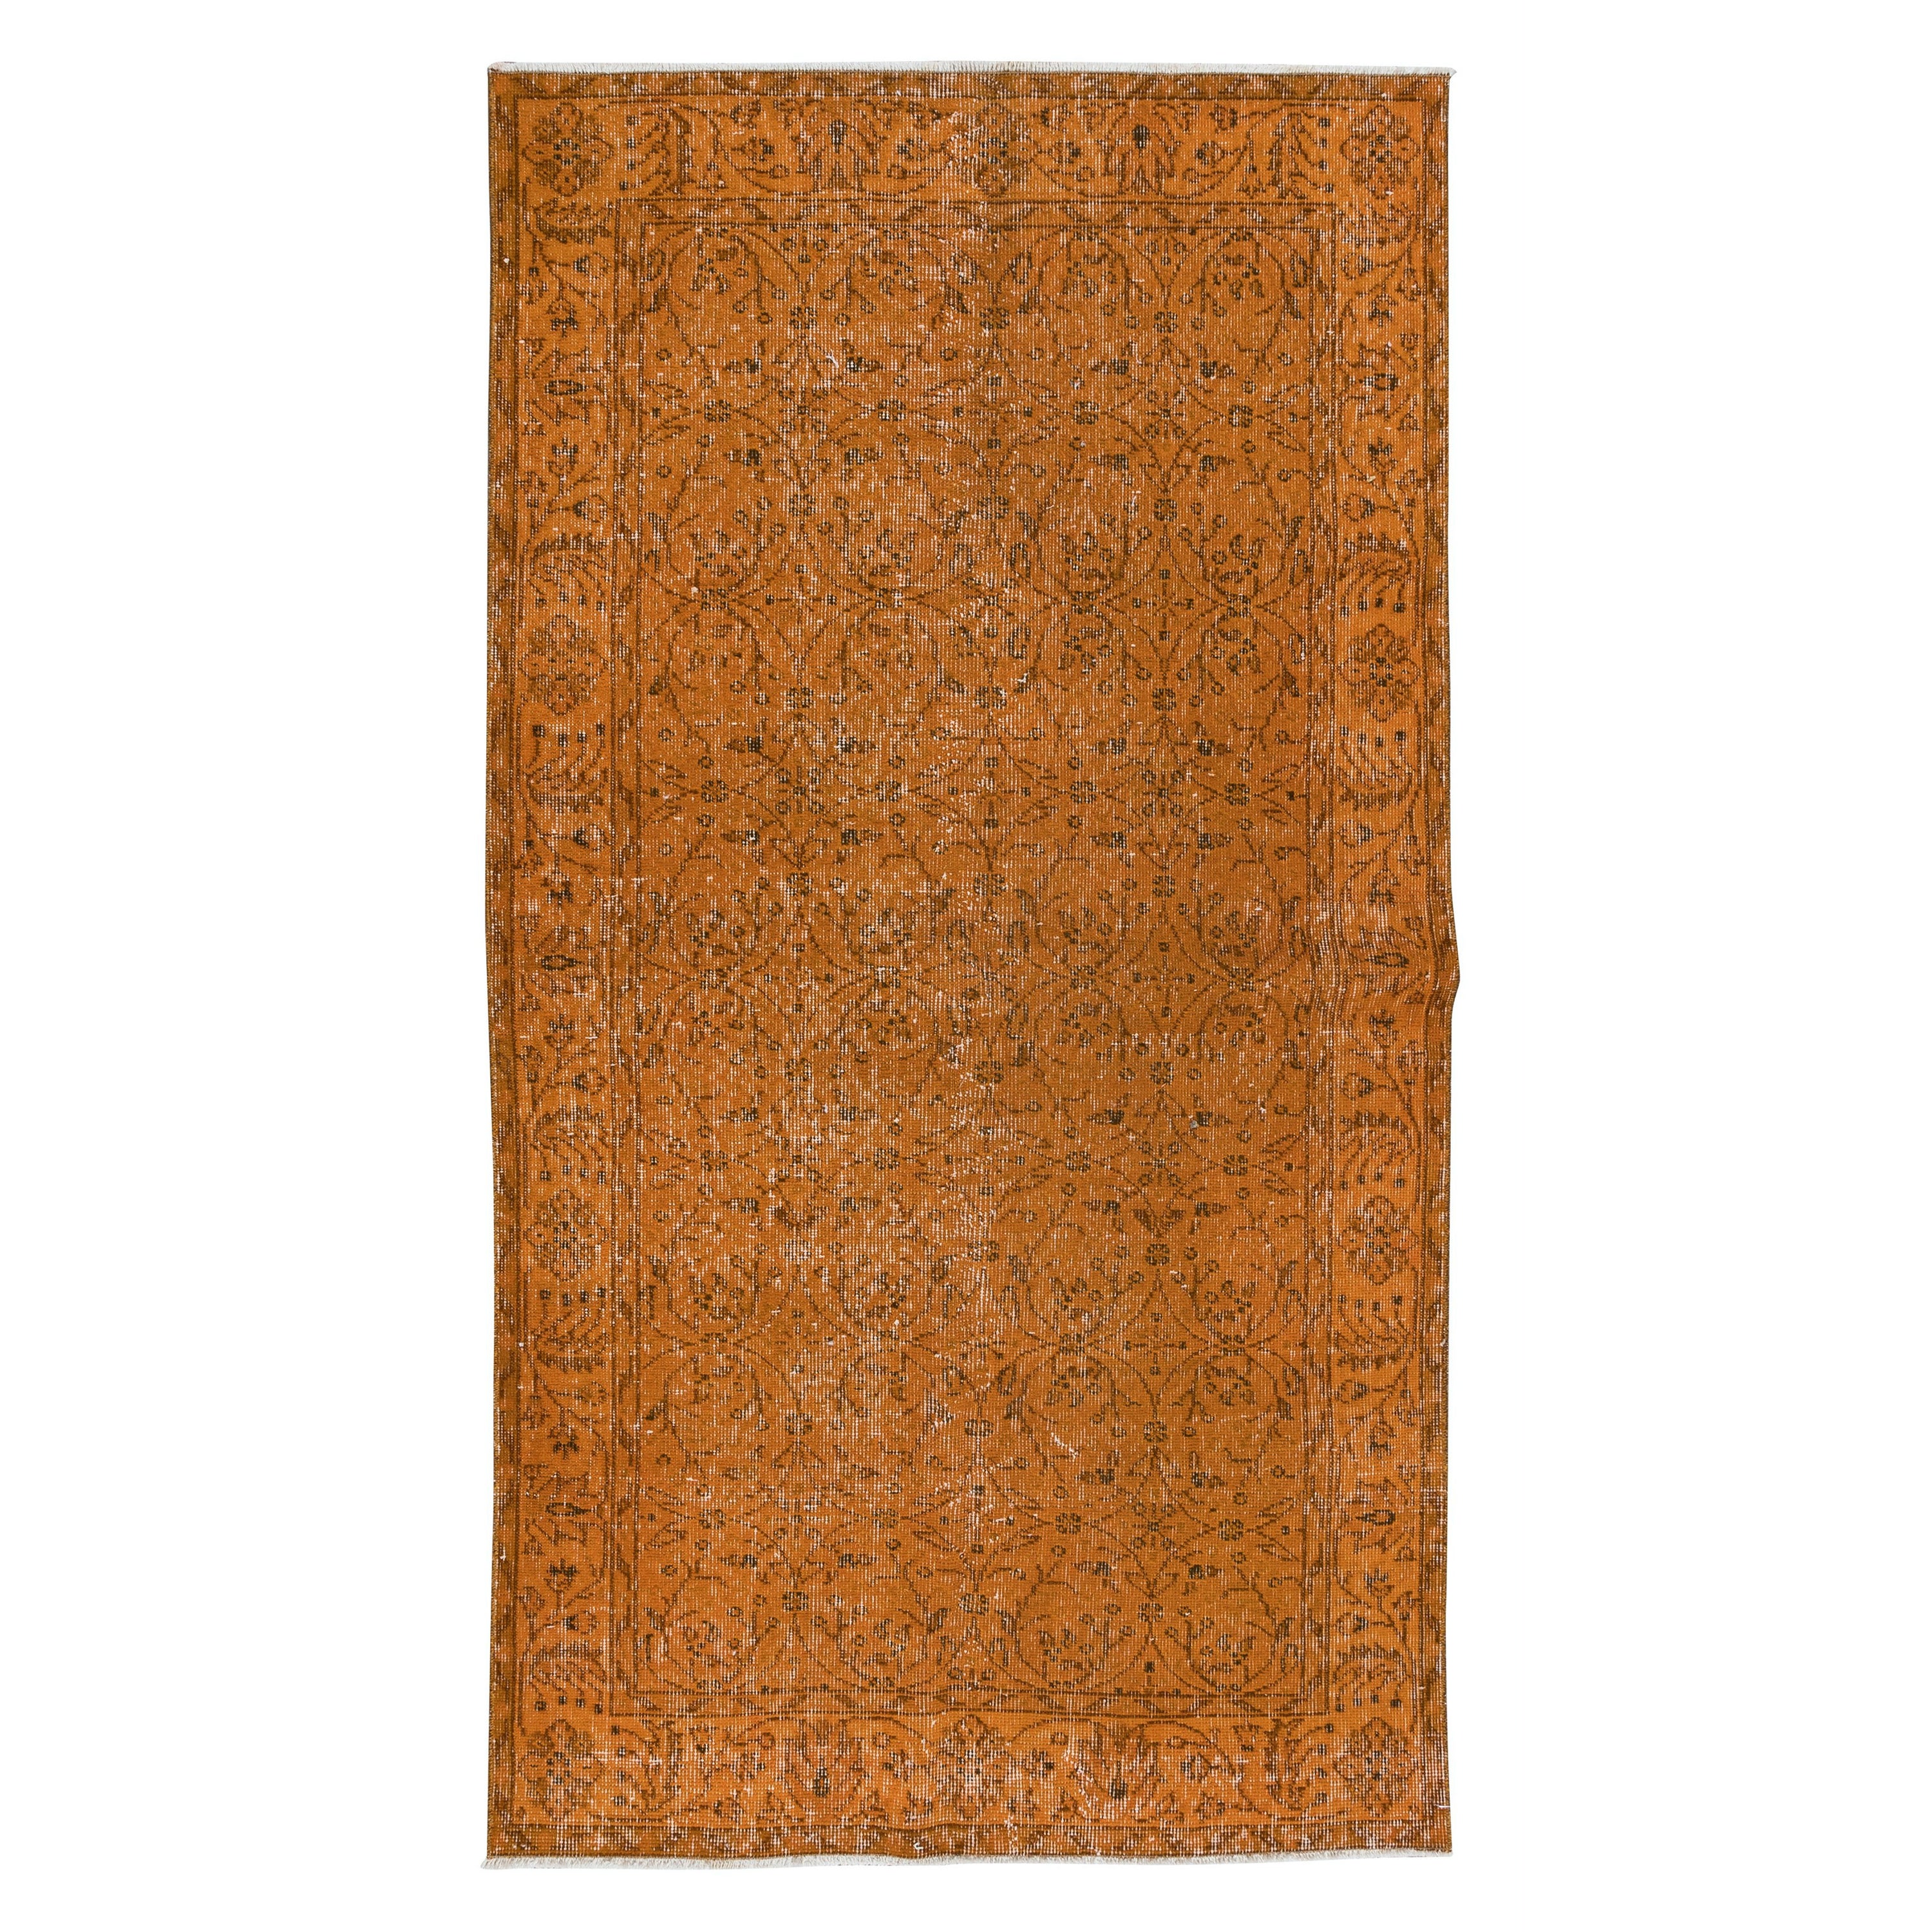 3.7x6.8 Ft Hand-Made Turkish Accent Rug in Orange, Modern Floral Pattern Carpet For Sale